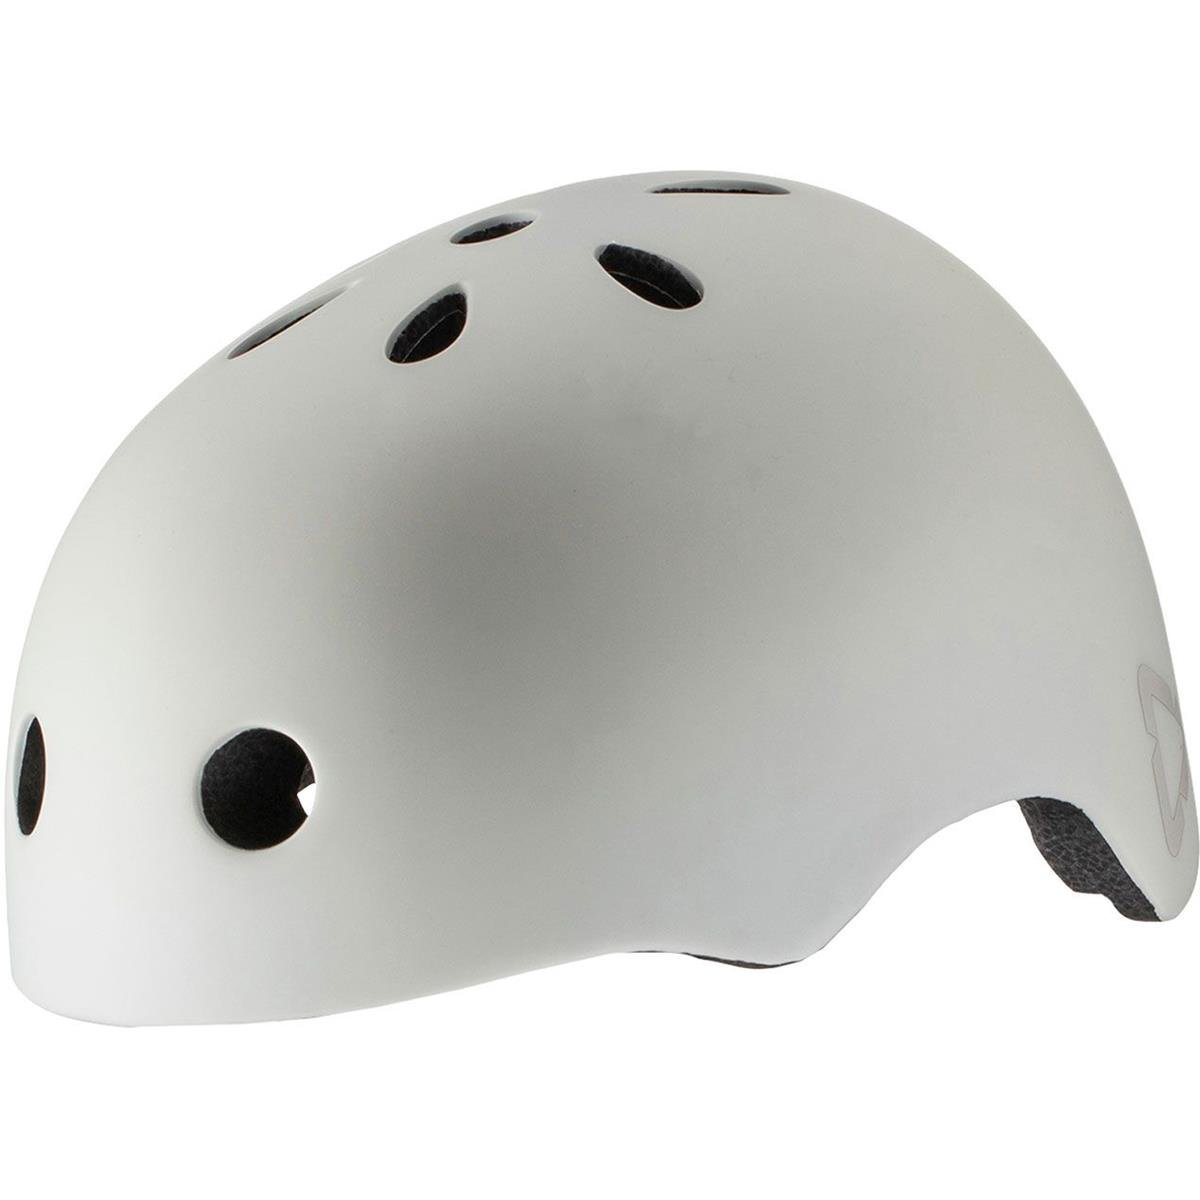 Leatt BMX/Dirt Helmet 1.0 Urban Steel